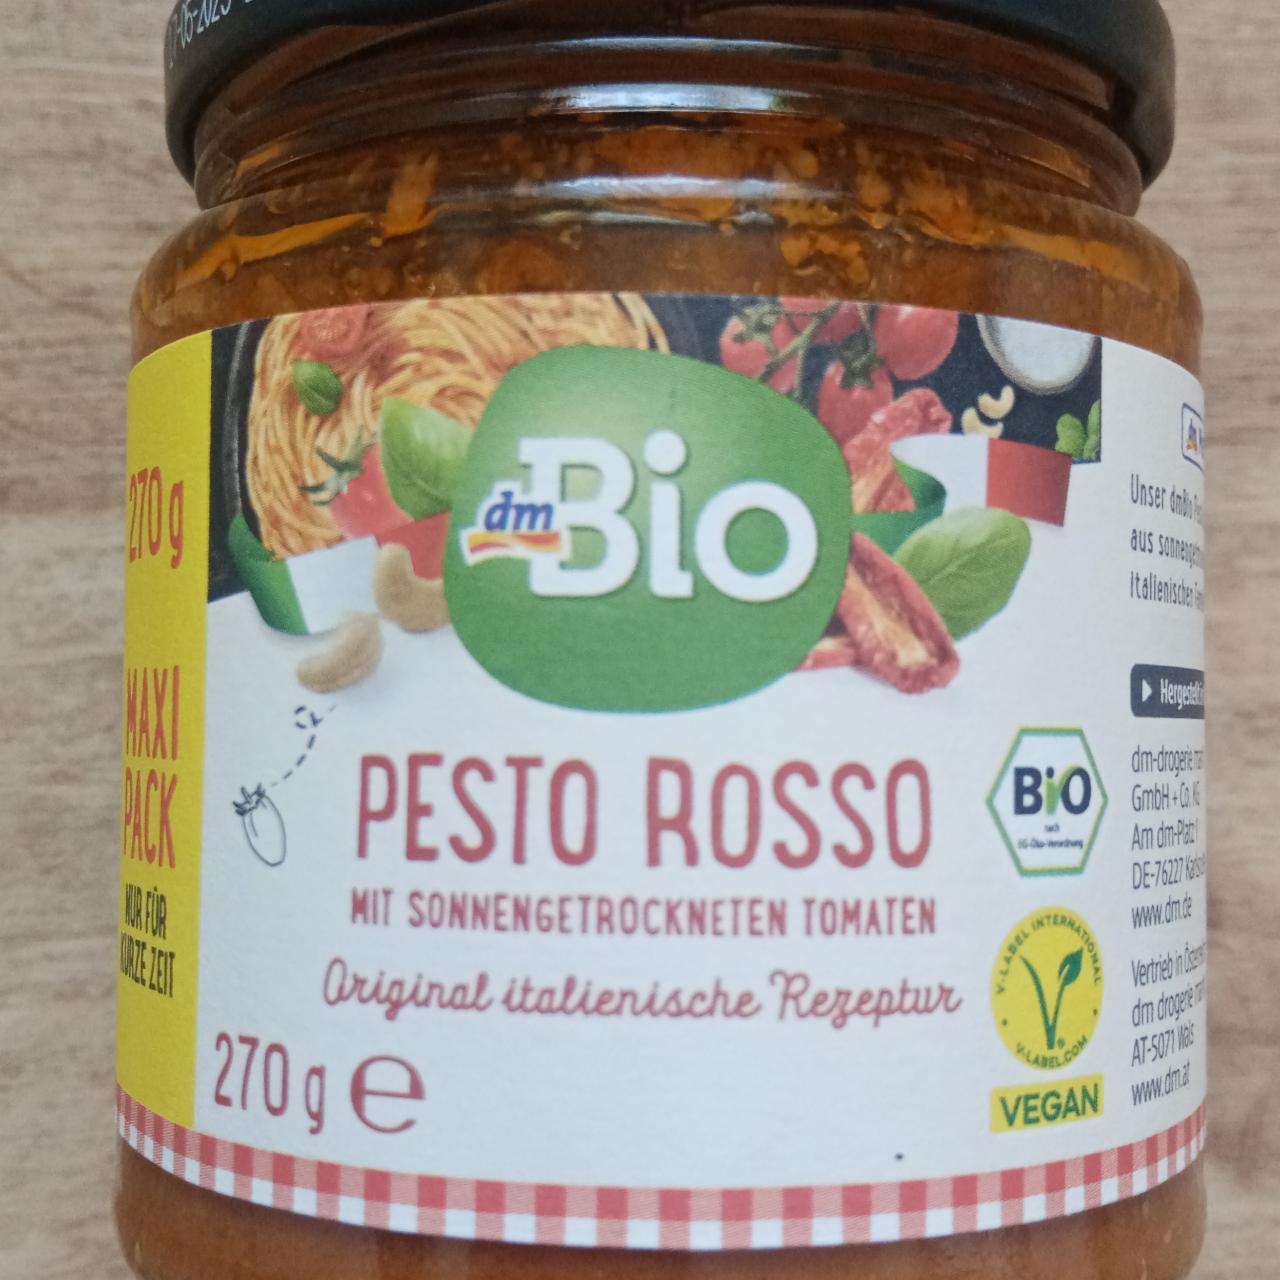 Fotografie - Pesto Rosso mit sonnengetrockneten tomaten dmBio